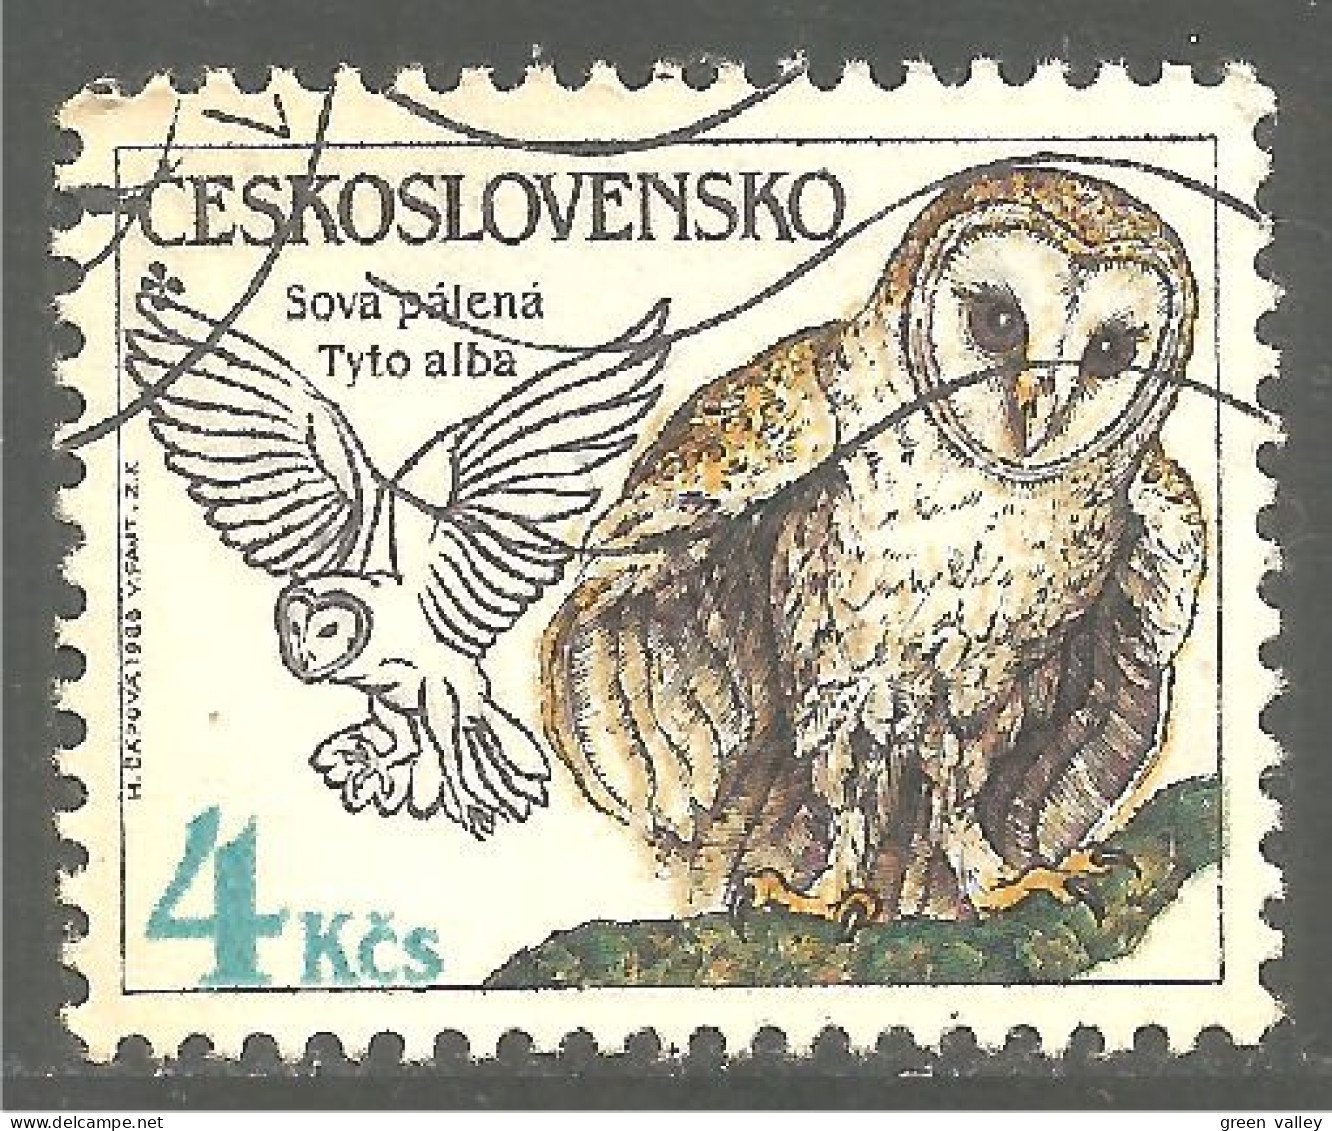 OI-156 Ceskoslovenko Hibou Chouette Owl Eule Gufo Uil Buho - Owls